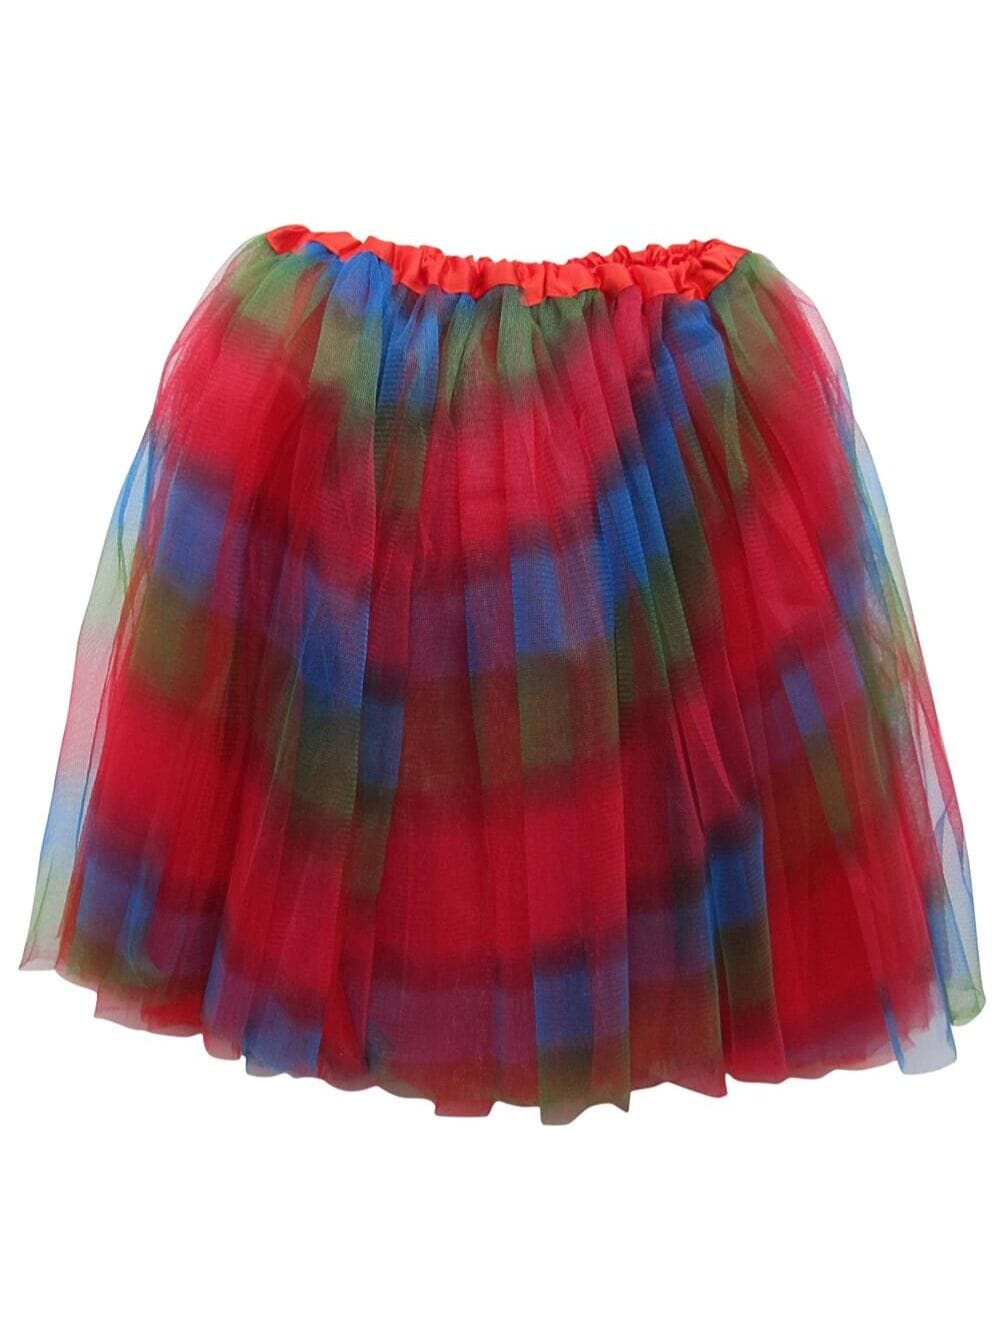 Rainbow Red Adult Tutu Skirt - Women's Size 3-Layer Basic Ballet Costume Dance Tutus - Sydney So Sweet